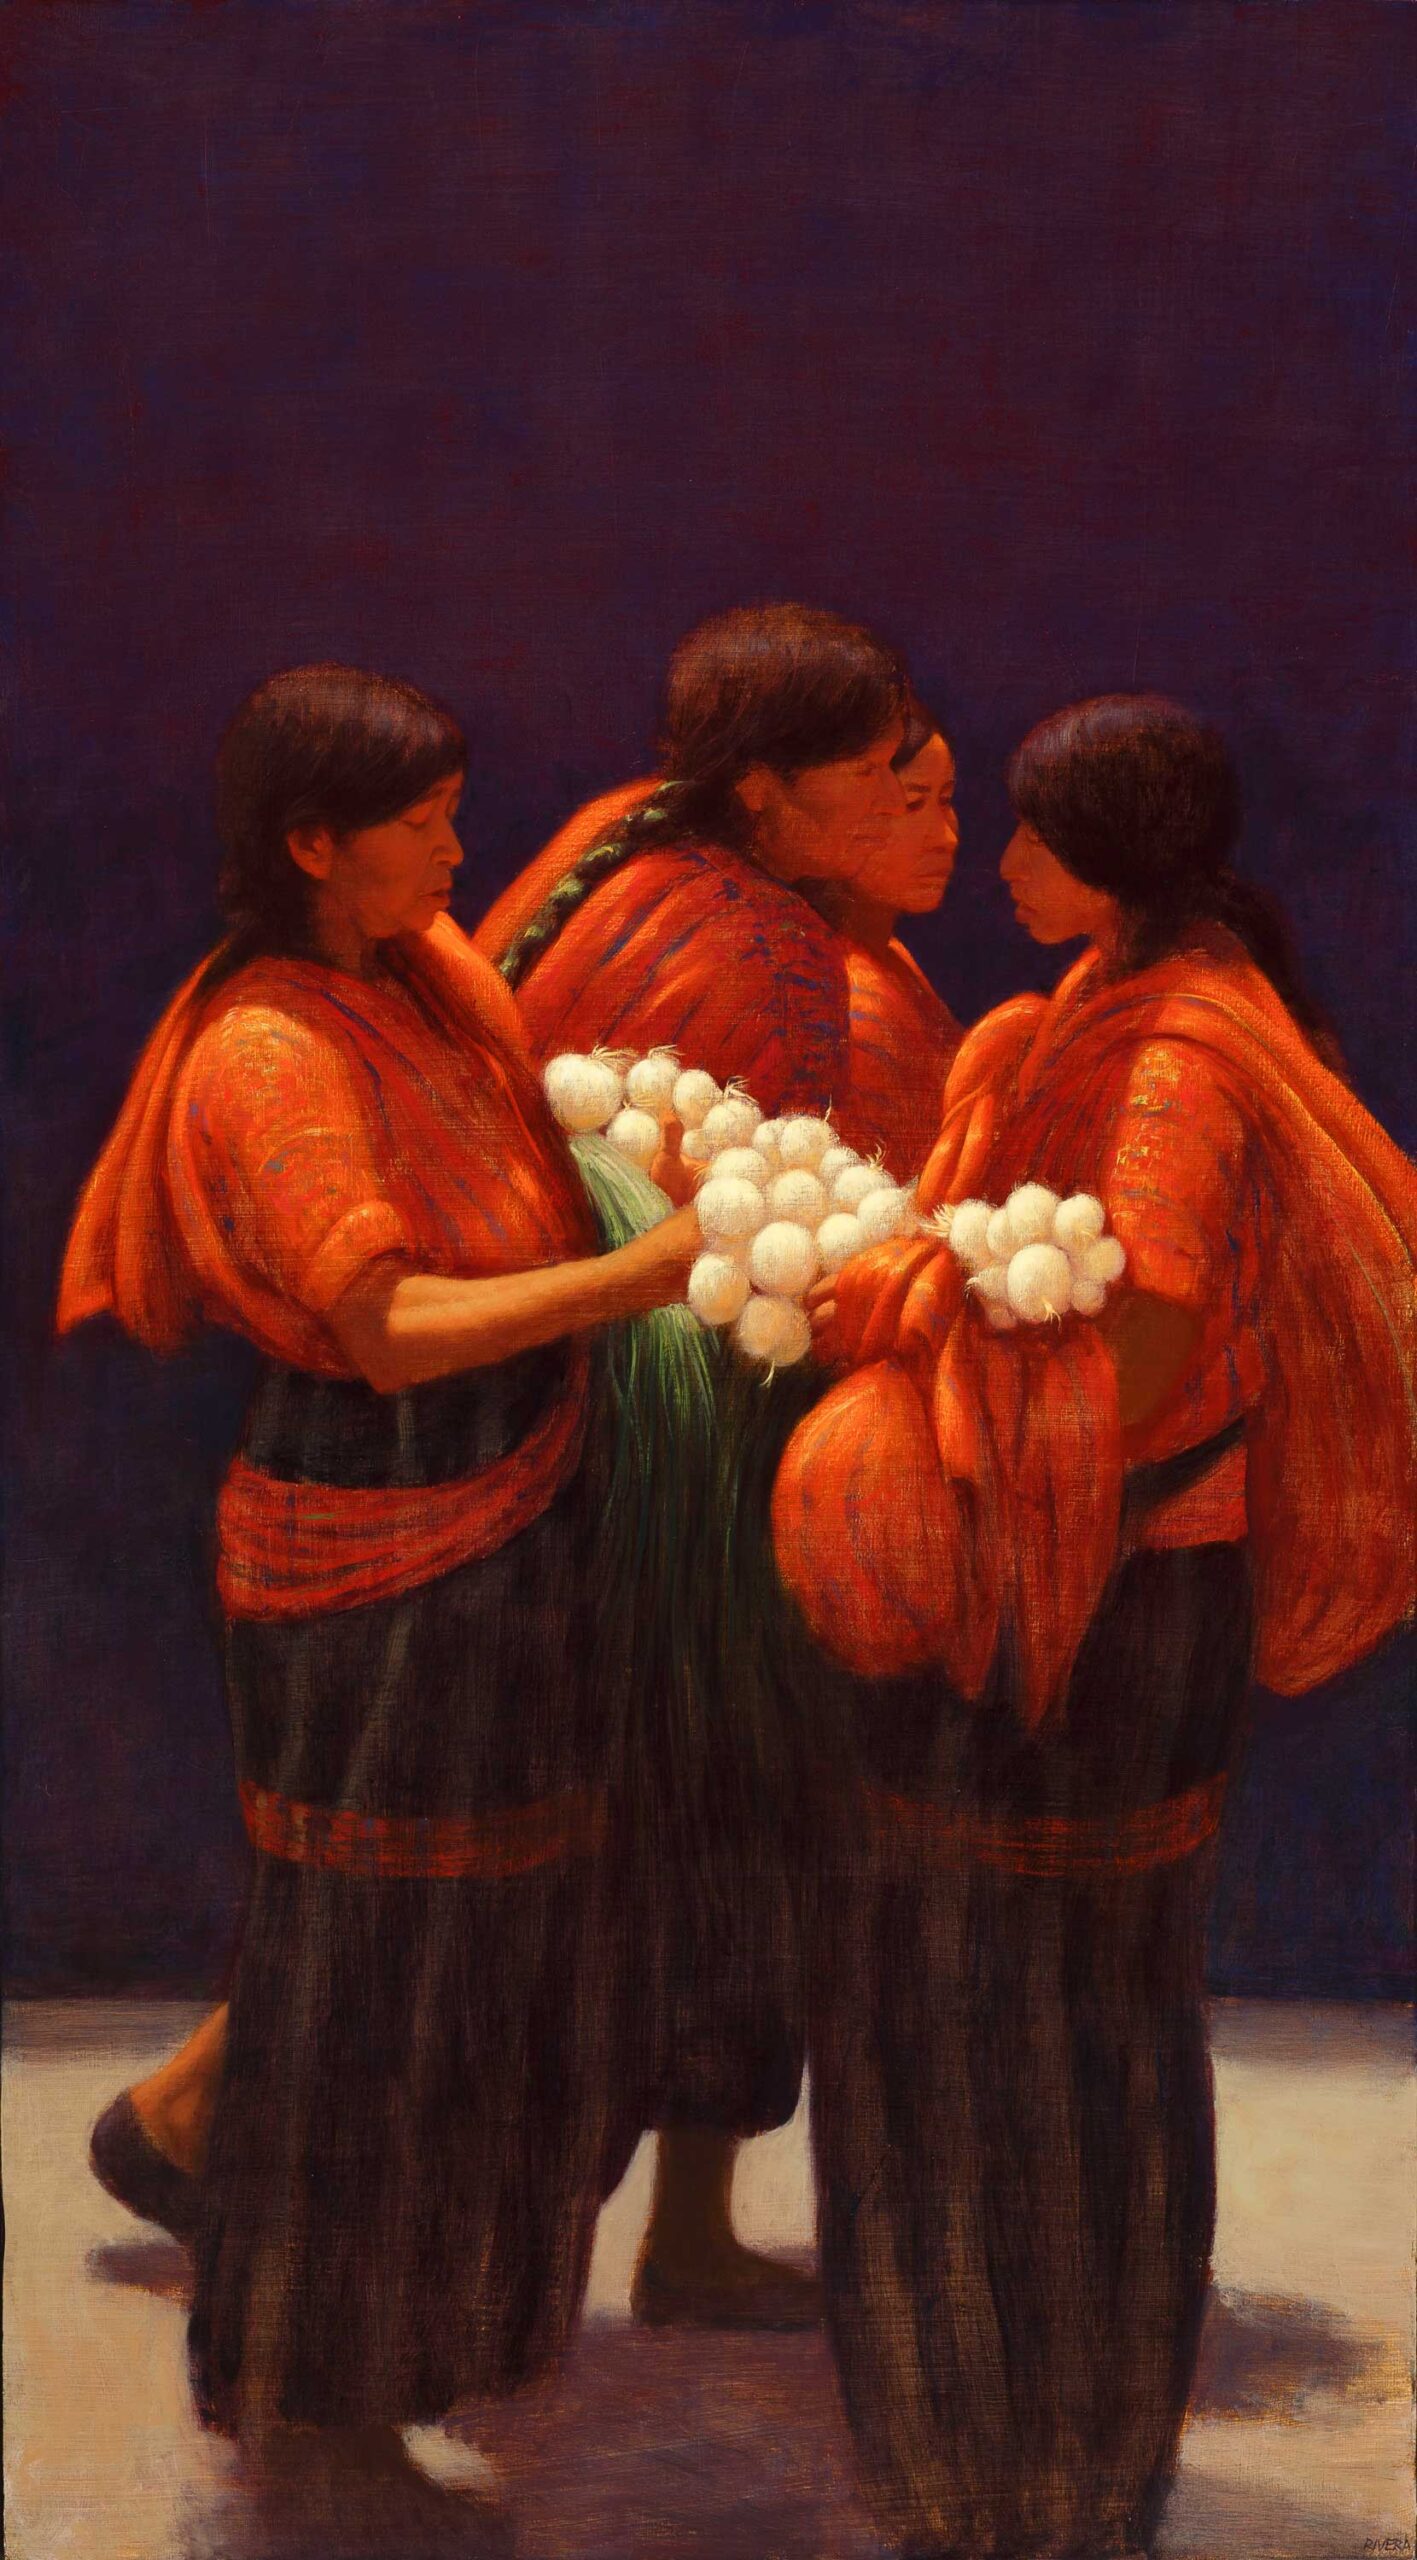 Elias Rivera, "White Onions," 1995, oil on canvas, 72 x 40 in.